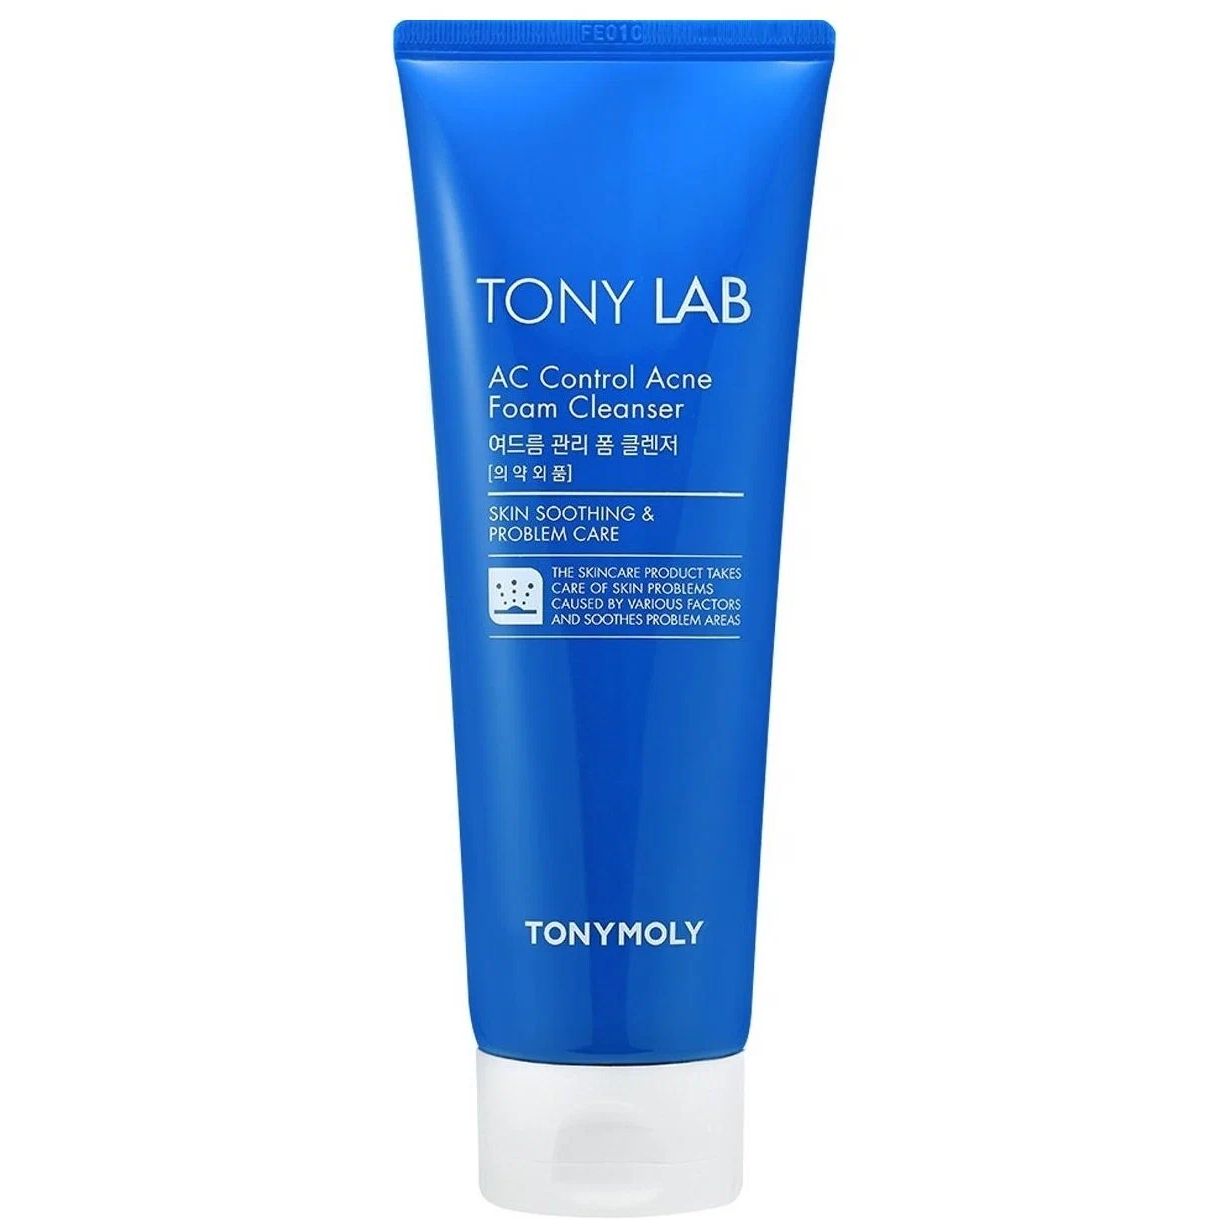 Пенка для умывания TONY MOLY Tony Lab AC Control Acne для проблемной кожи, 150 мл пенка для умывания cetaphil матирующая derma control 237 мл